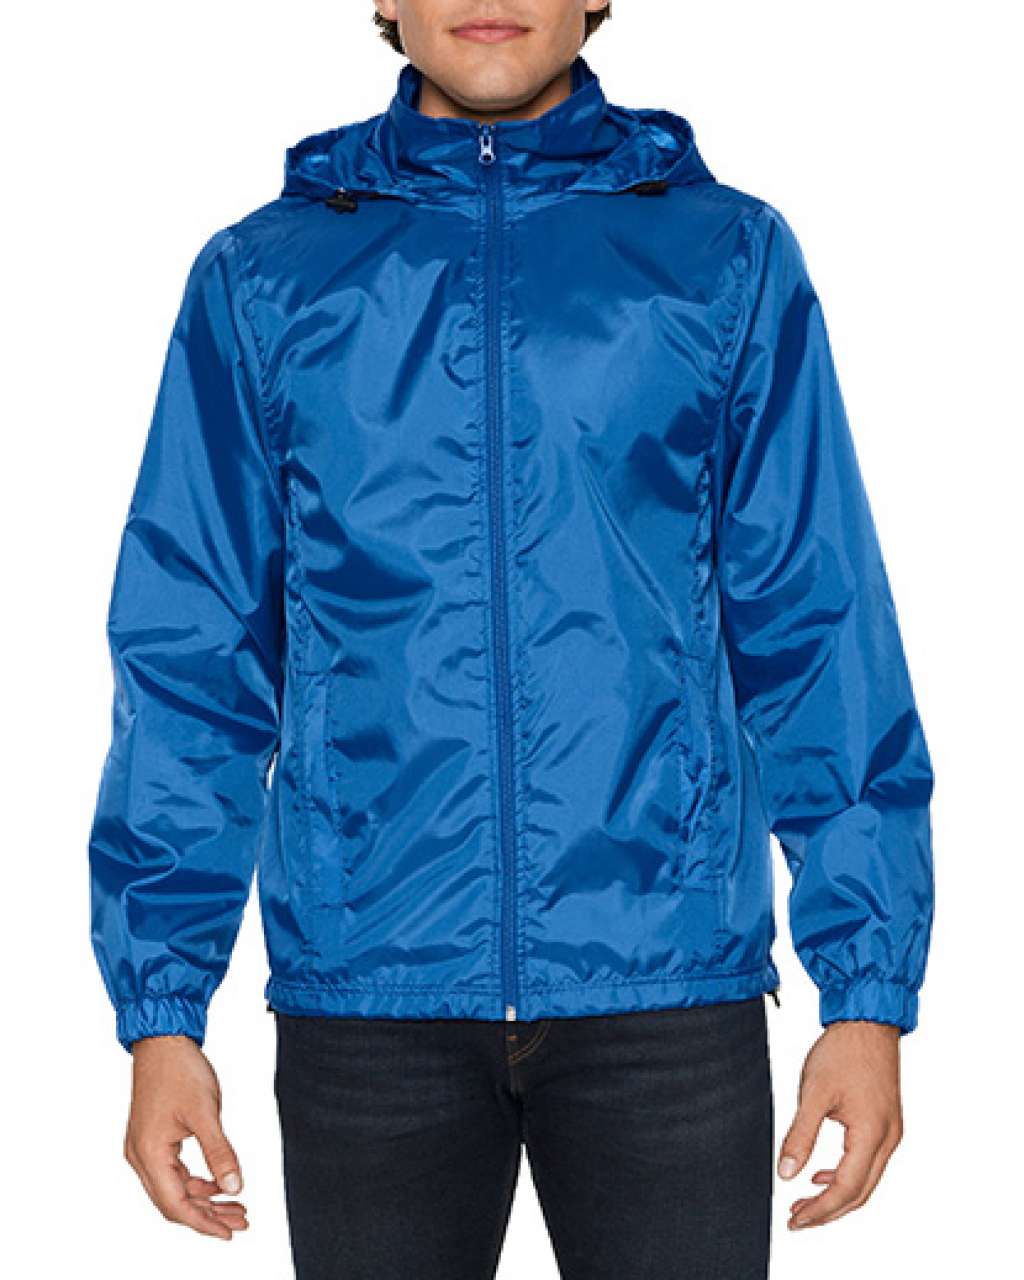 Gildan Hammer Unisex Windwear Jacket - blau